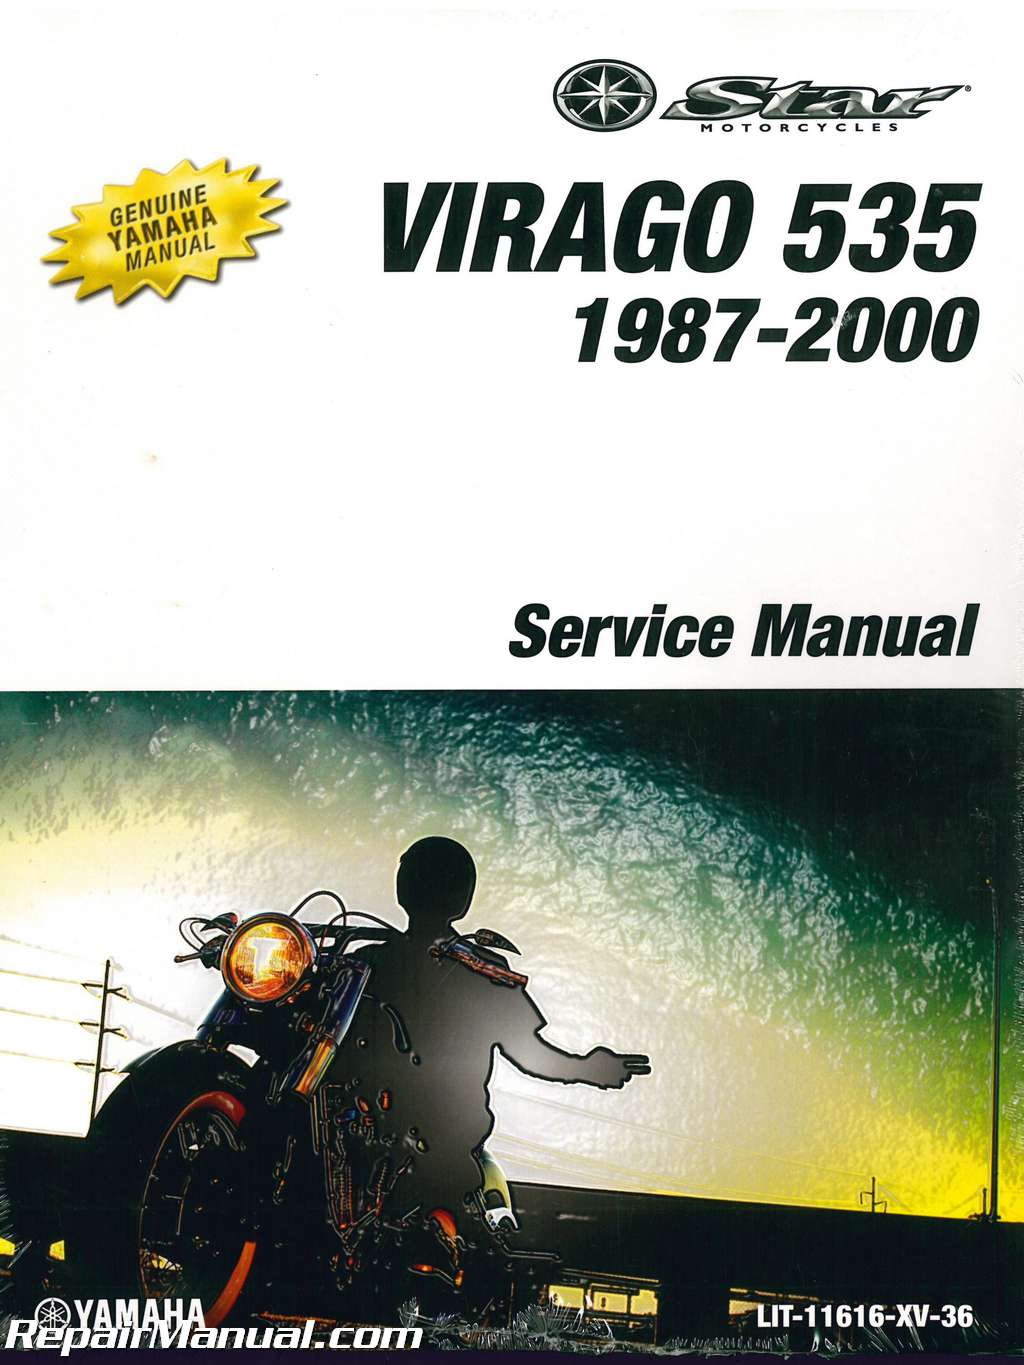 1984 yamaha virago 750 service manuals